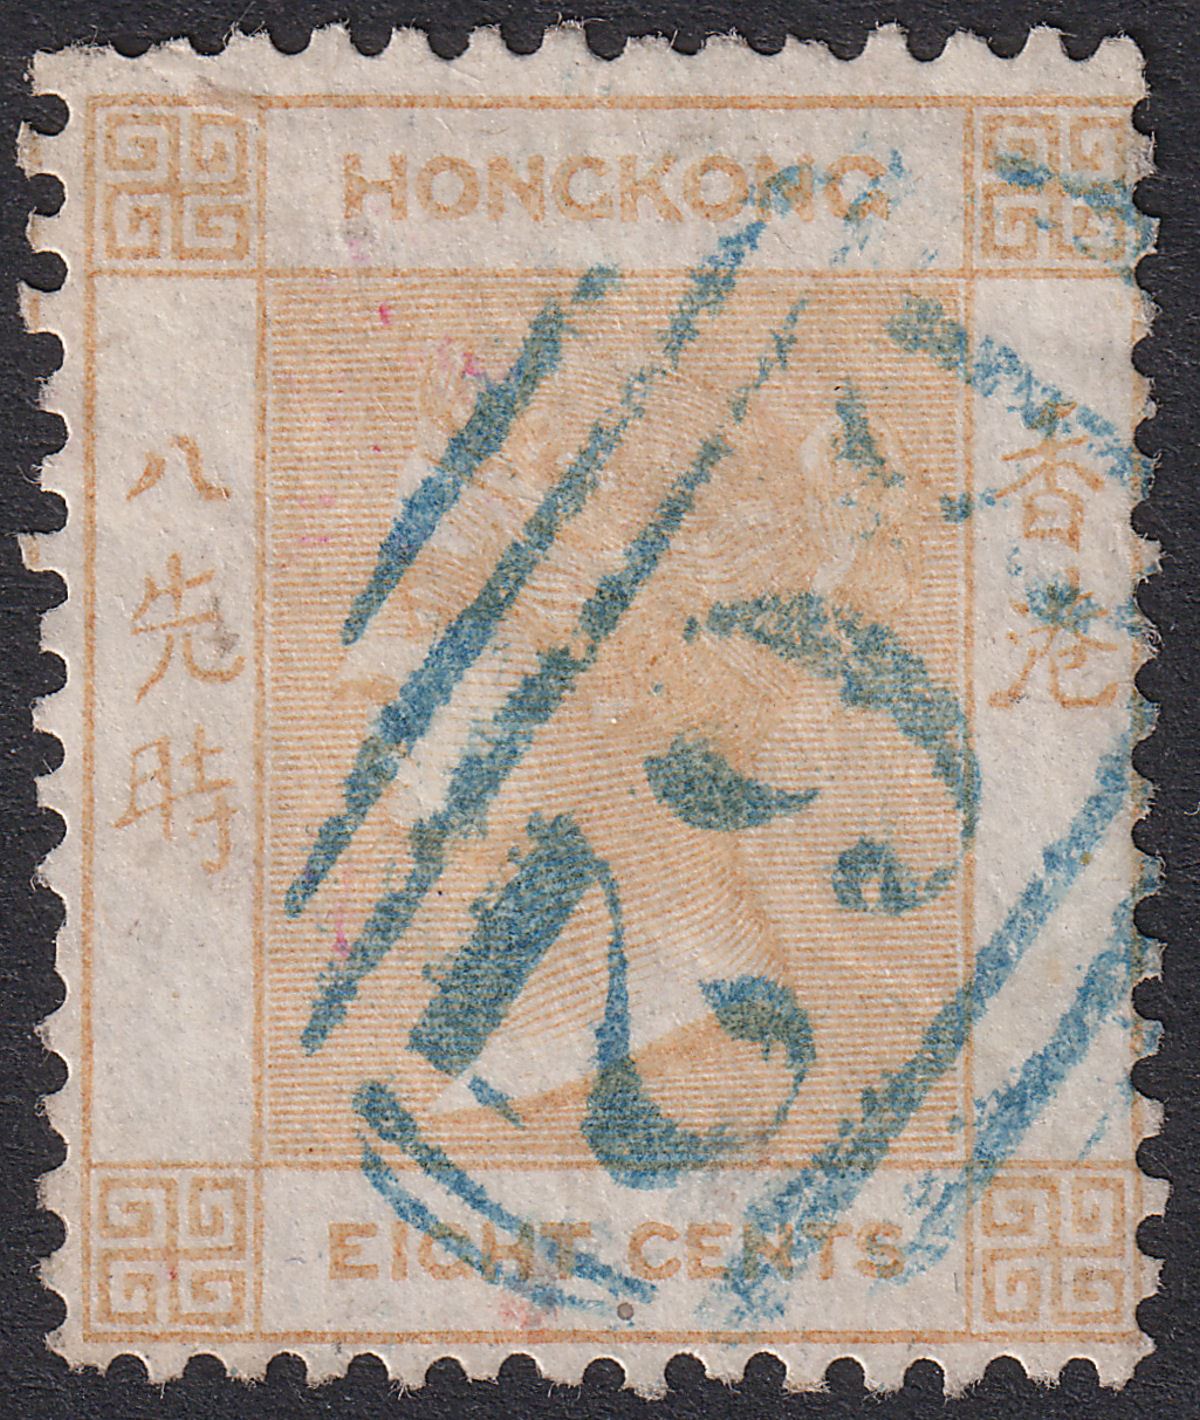 Hong Kong 1862 QV 8c Yellow-Buff Used SG2 cat £85 with blue B62 postmark